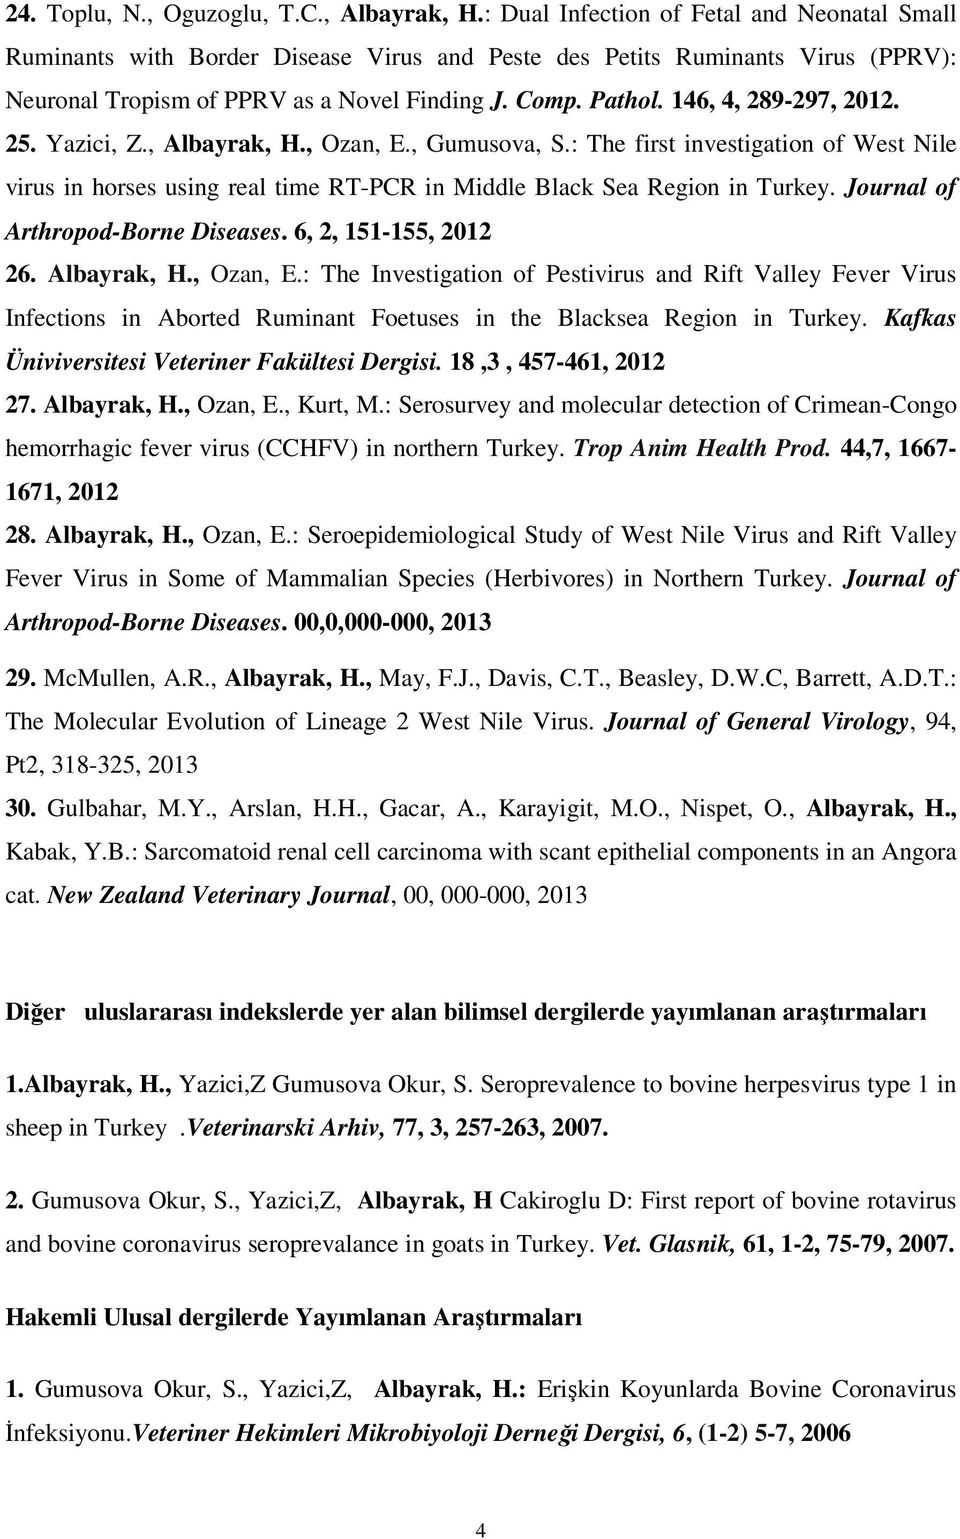 146, 4, 289-297, 2012. 25. Yazici, Z., Albayrak, H., Ozan, E., Gumusova, S.: The first investigation of West Nile virus in horses using real time RT-PCR in Middle Black Sea Region in Turkey.